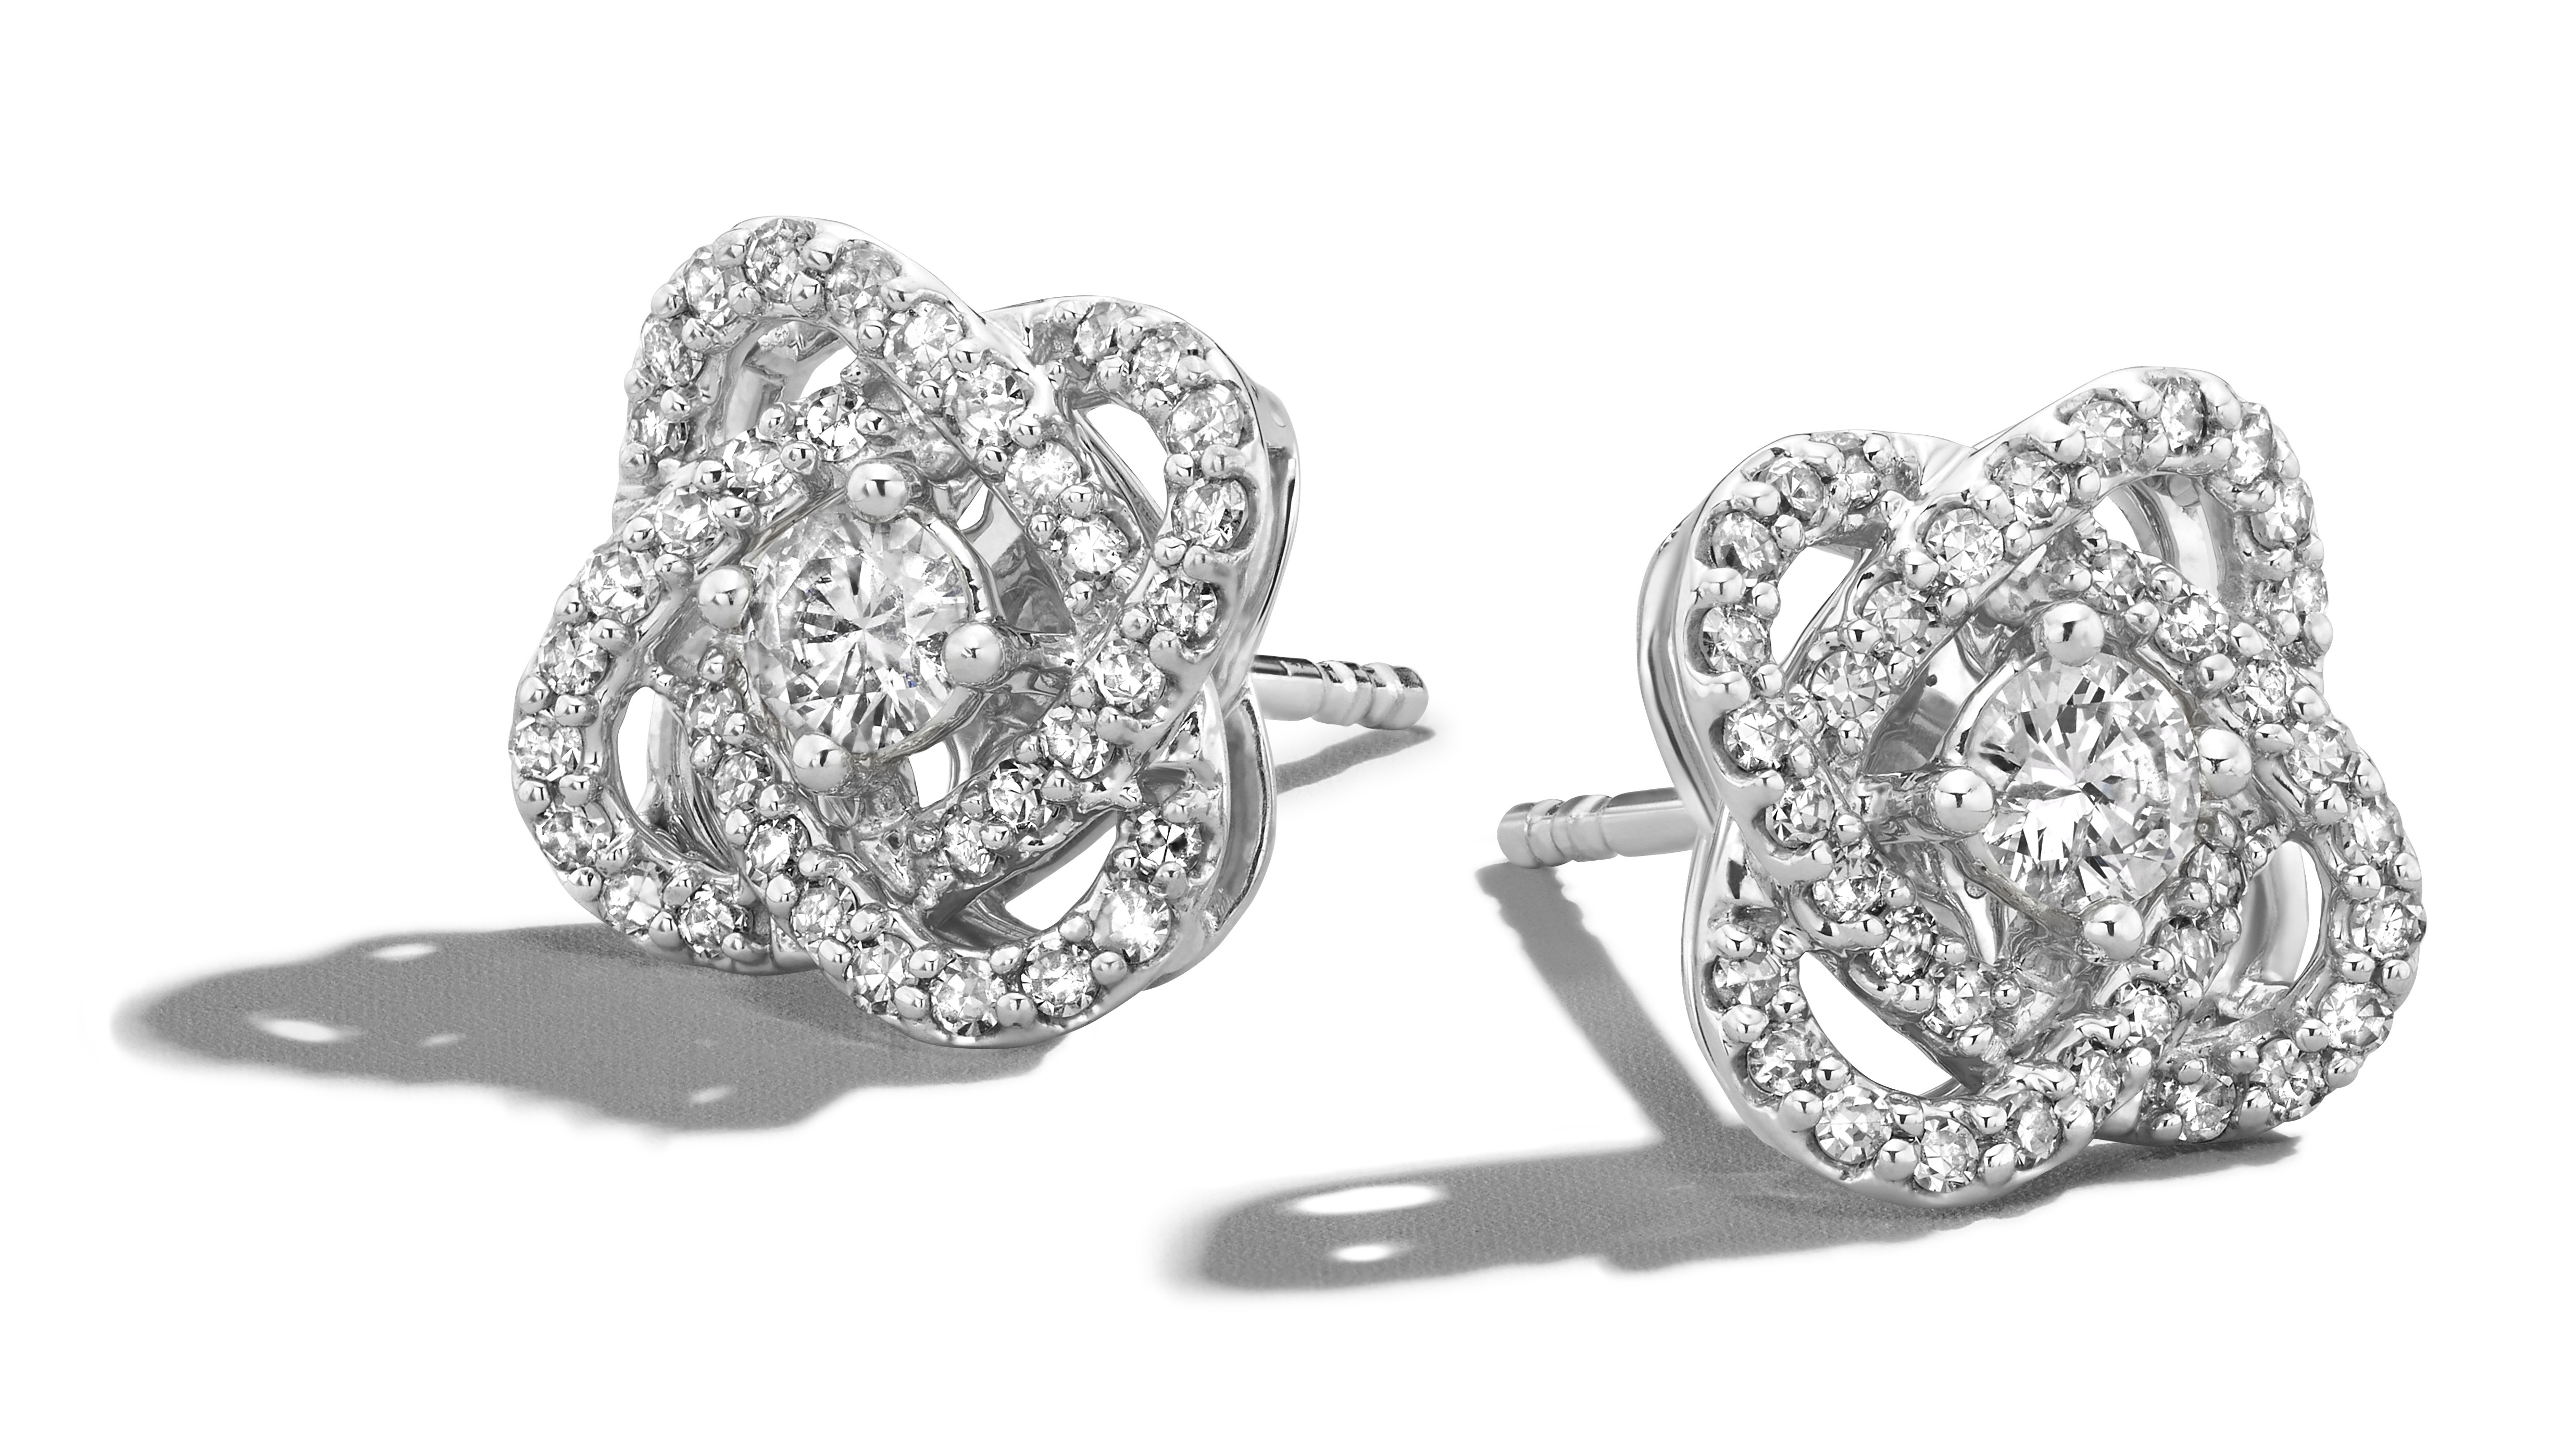 Buy kays jewelry diamond earrings OFF-65